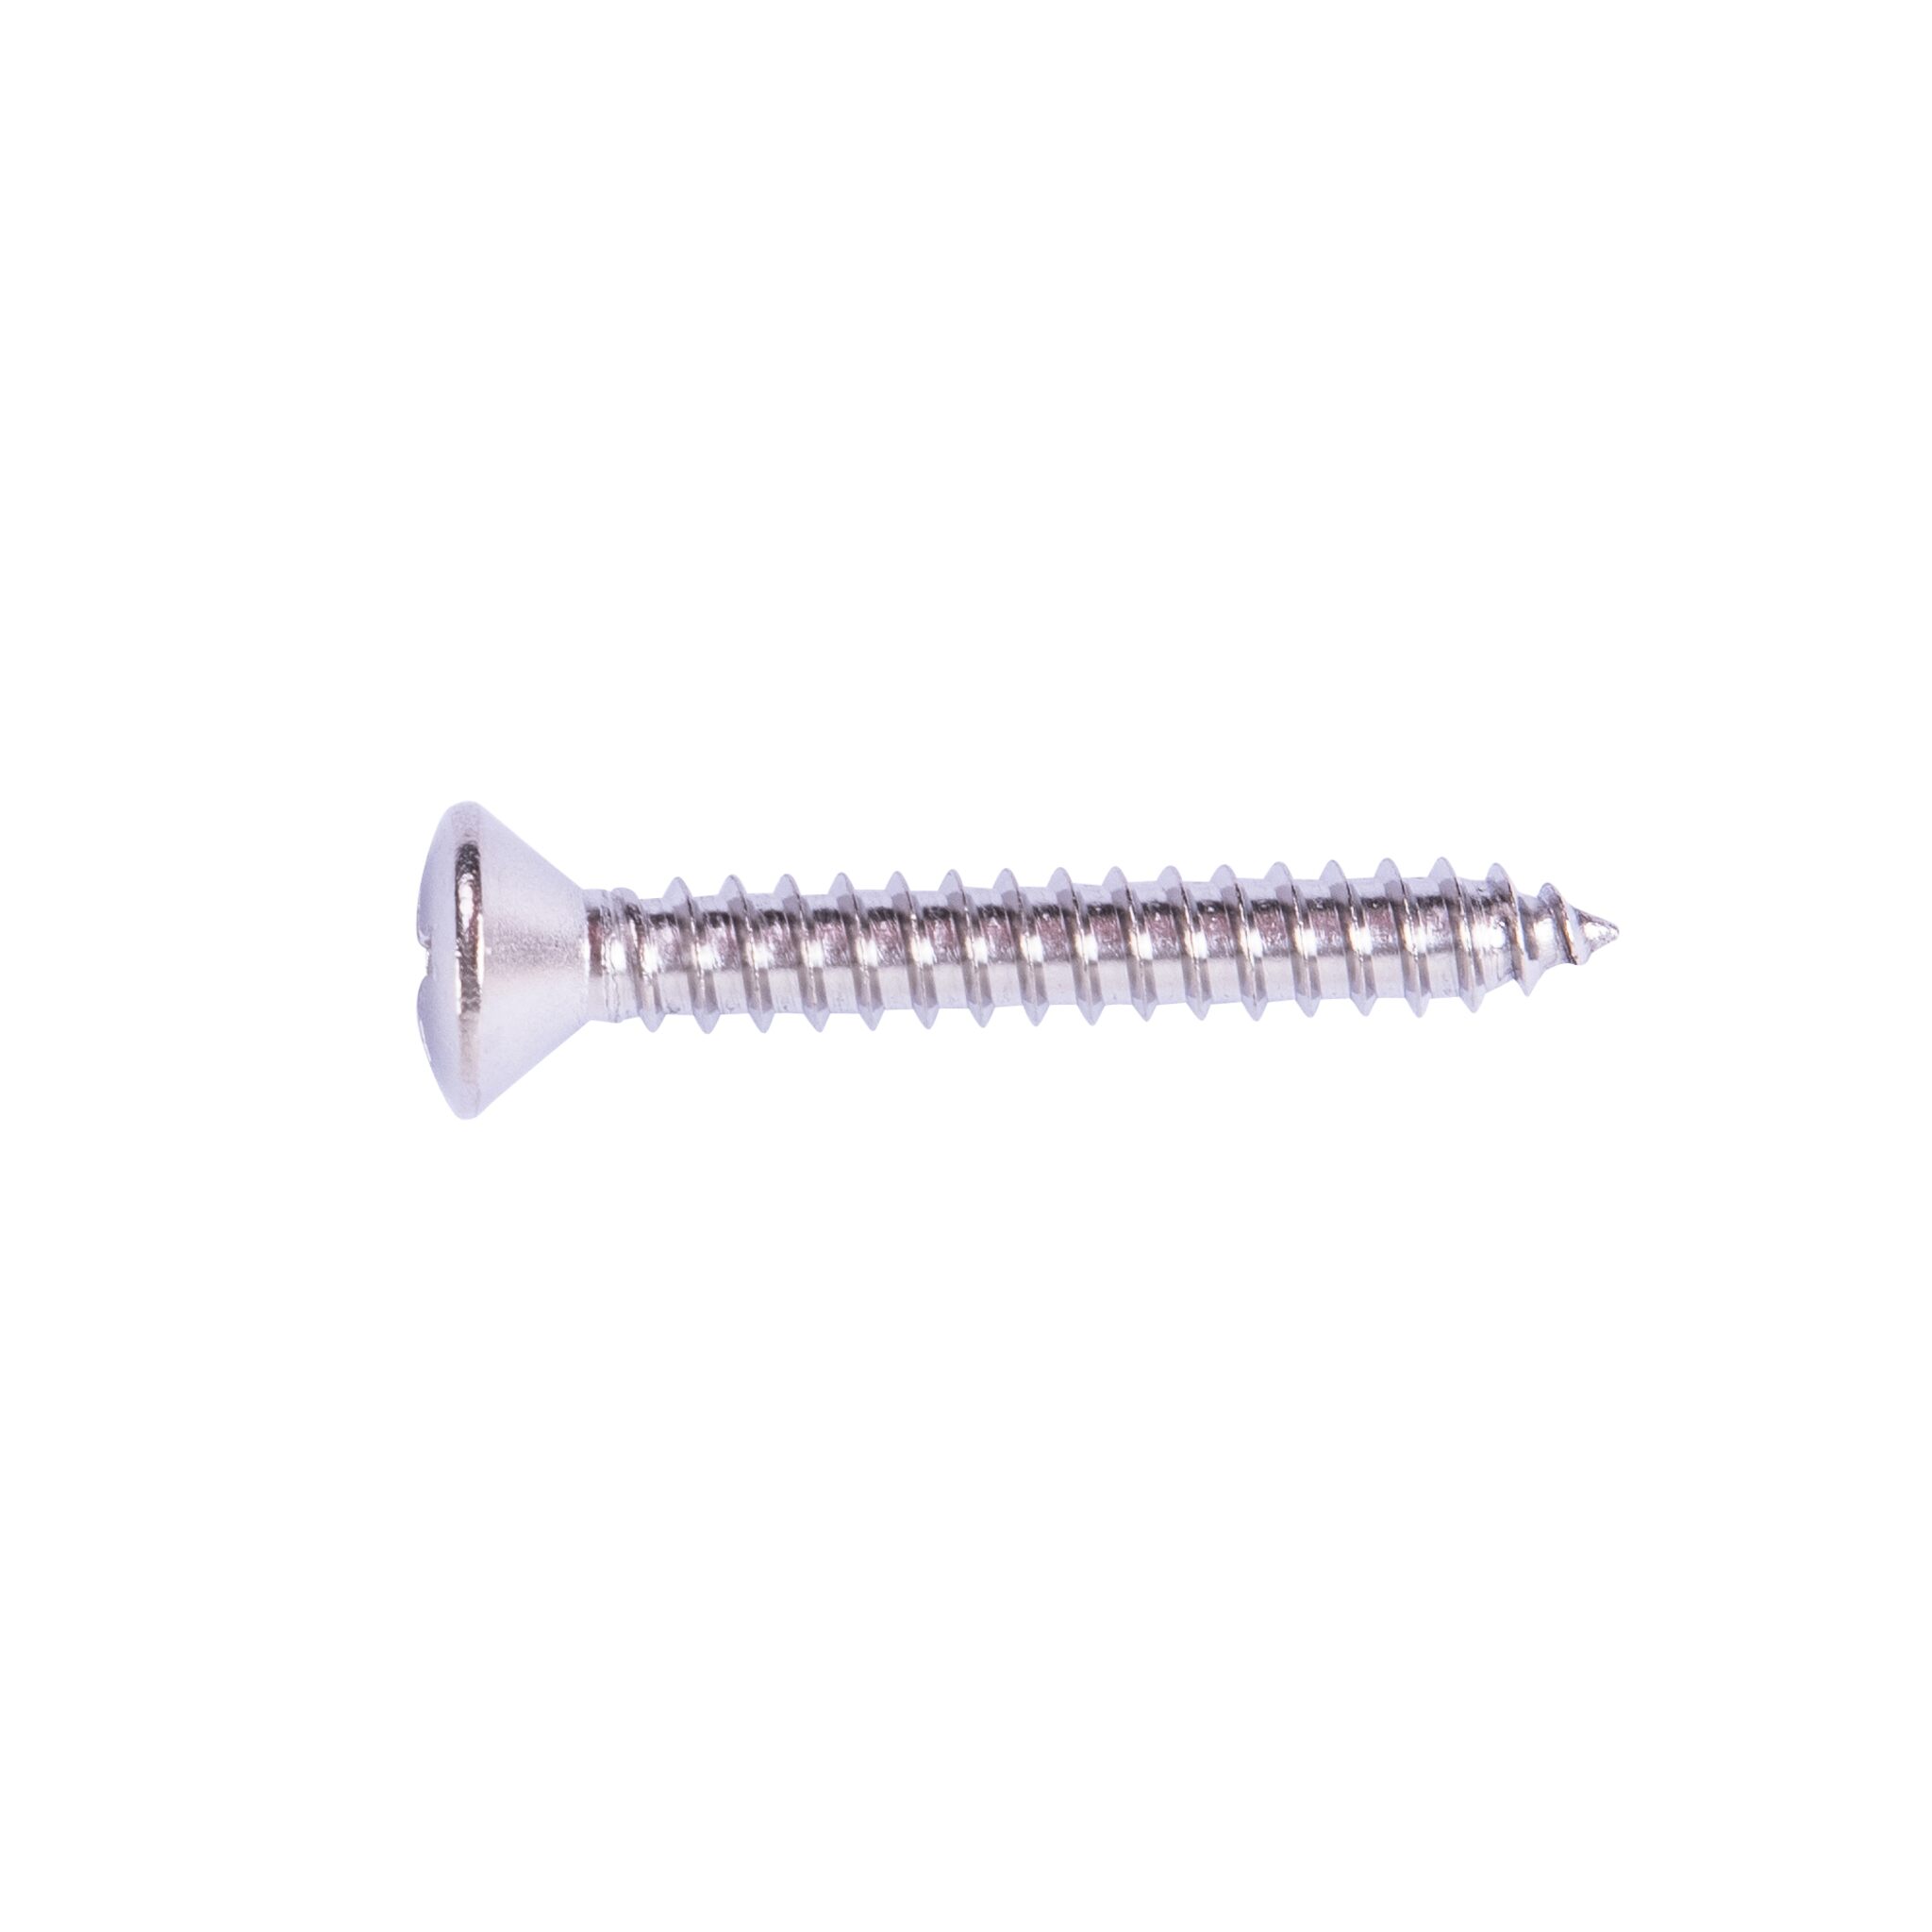 Raised countersunk head sheet metal screw (DIN 7983-A4)